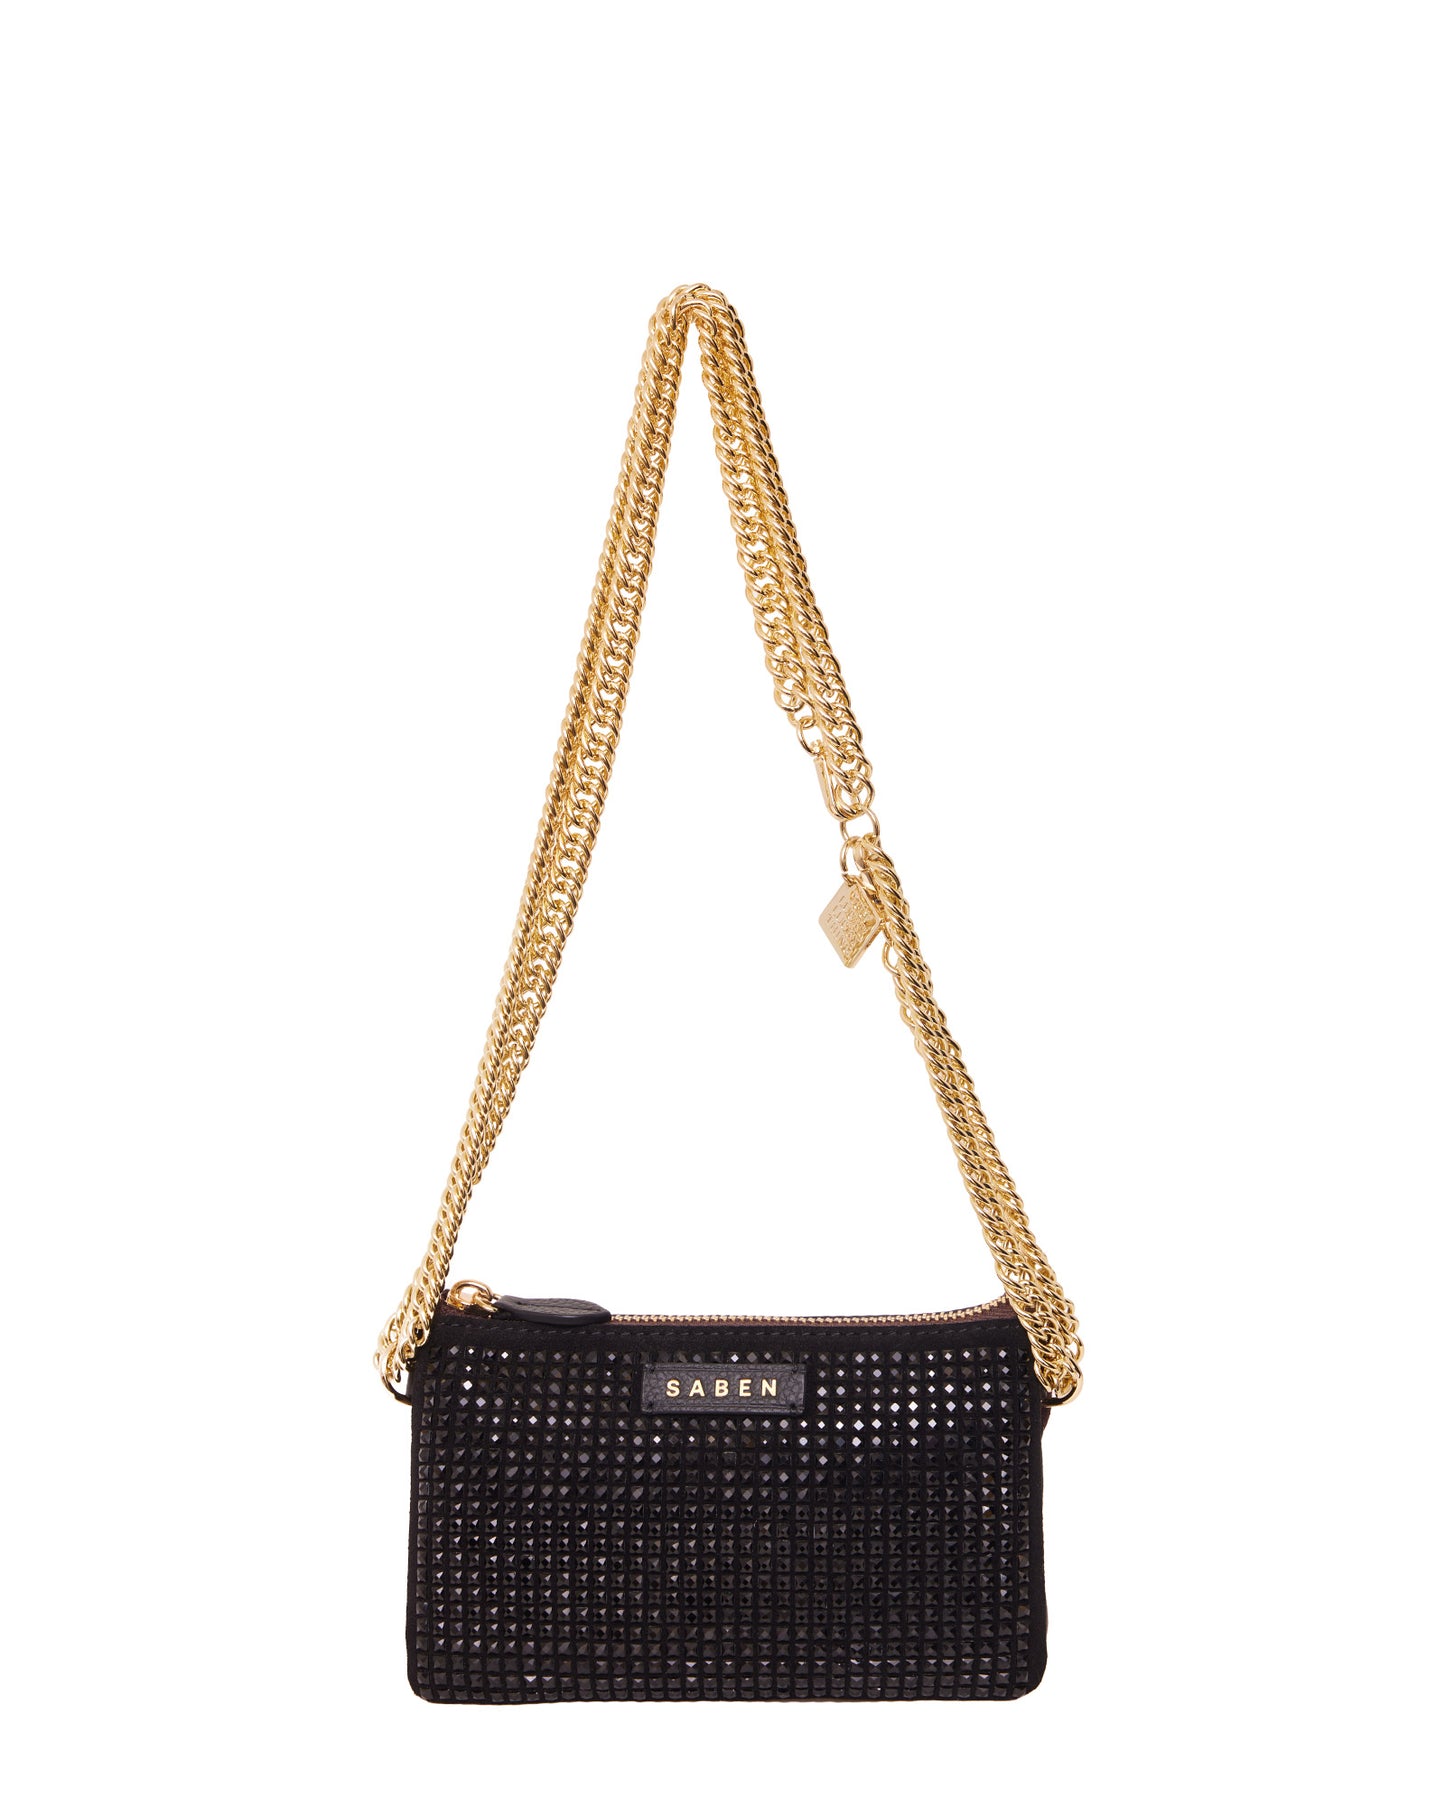 SABEN // Lily Mini Bag BLACK CRYSTAL + GOLD CURB CHAIN